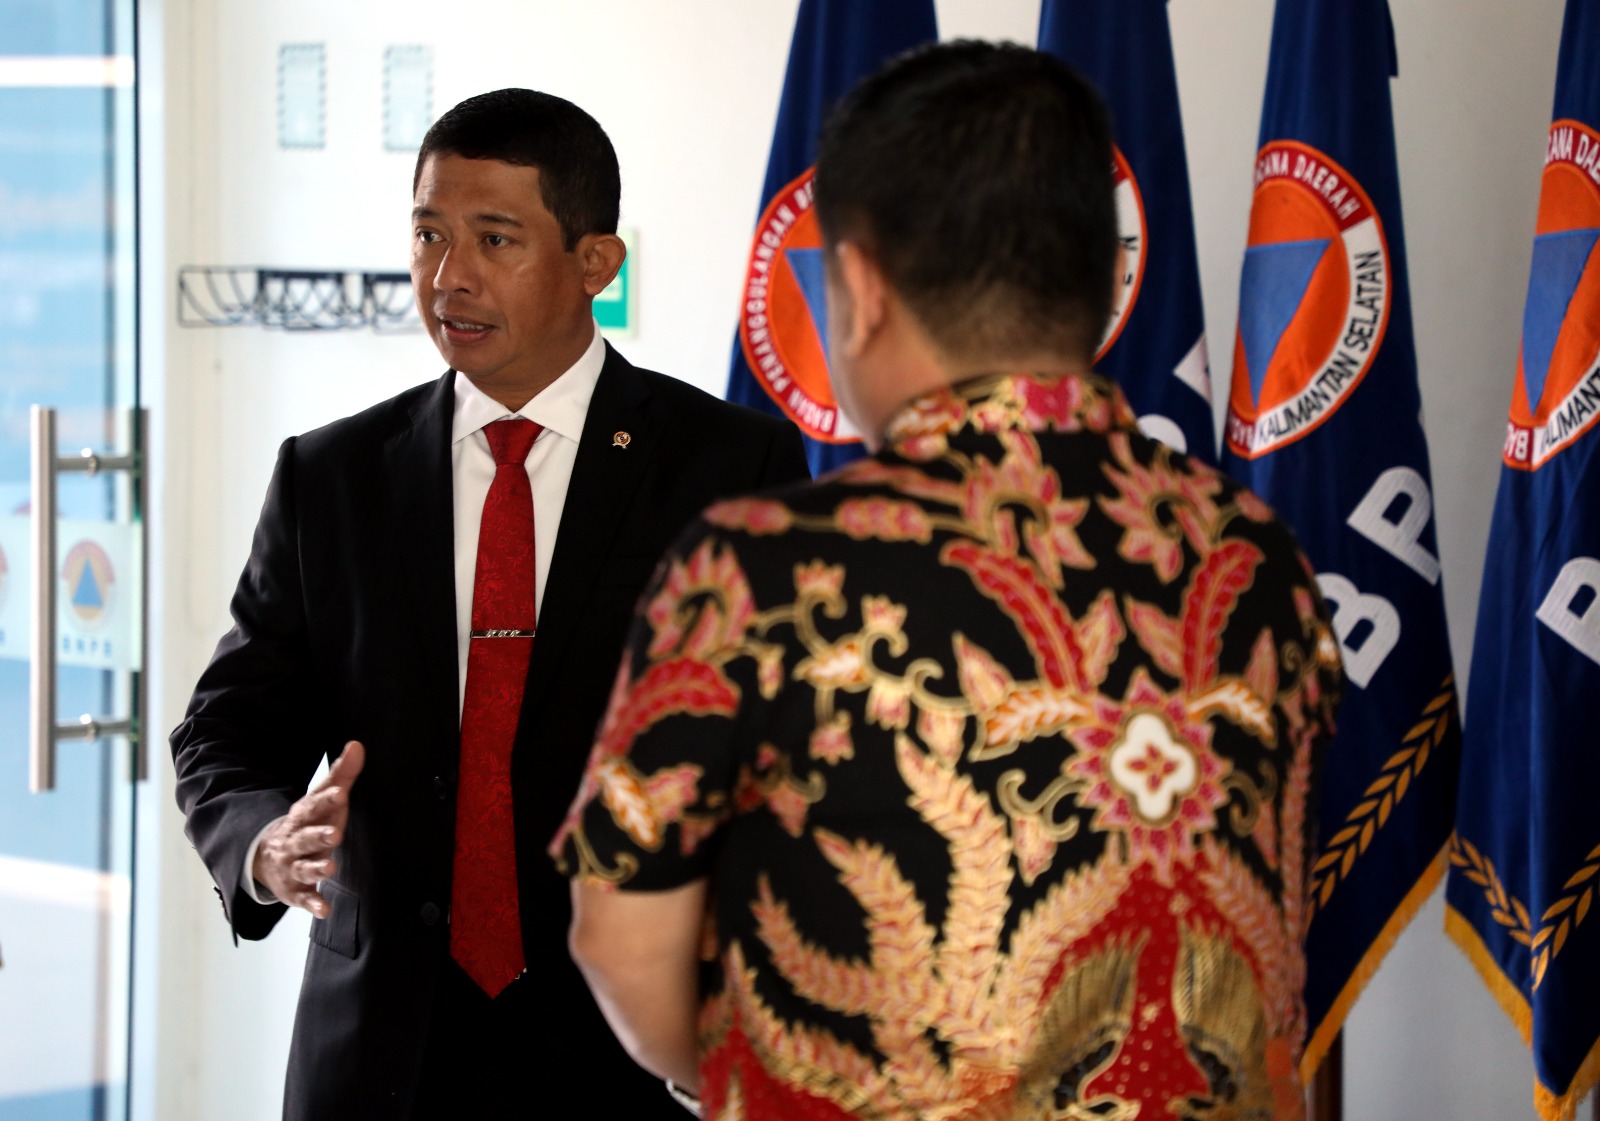 Kepala BNPB Letjen TNI Suharyanto (kiri) saat menerima kunjungan dari Sinar Mas Grup dalam kegiatan minyak murah di Bazar Ramadan BNPB, Graha BNPB, Jakarta, Selasa (21/3).